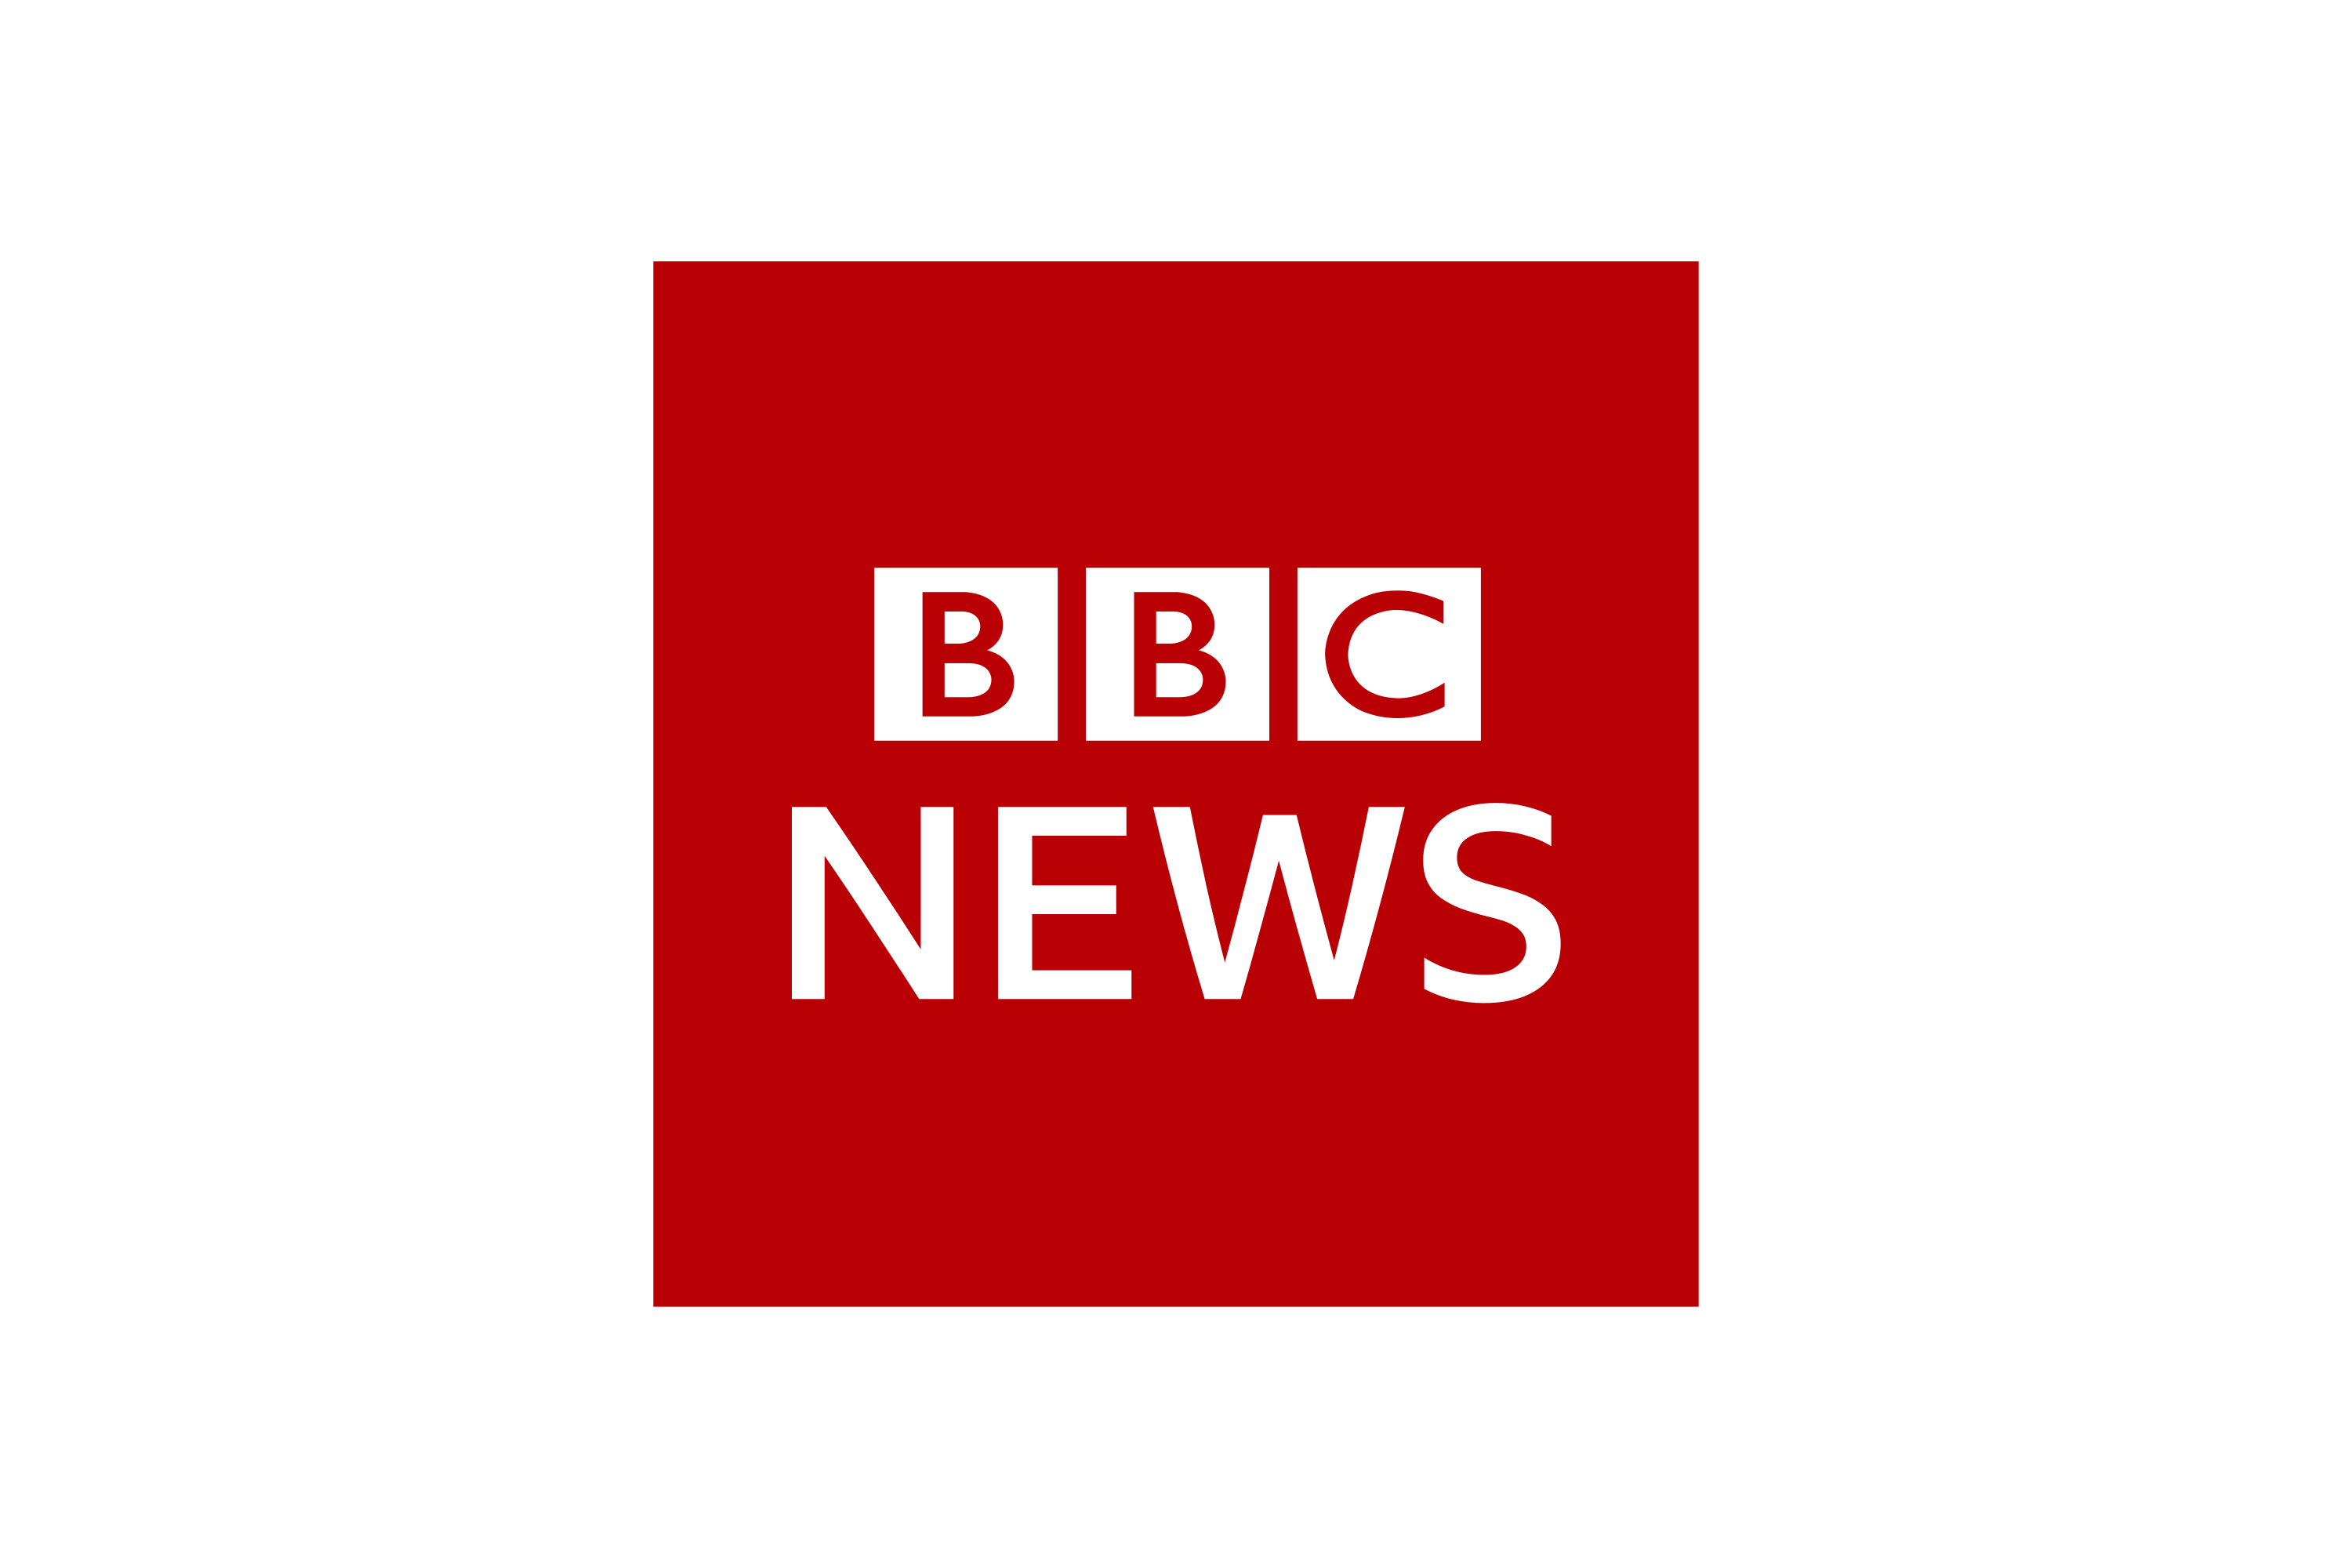 BBC News logo - Project Harmless